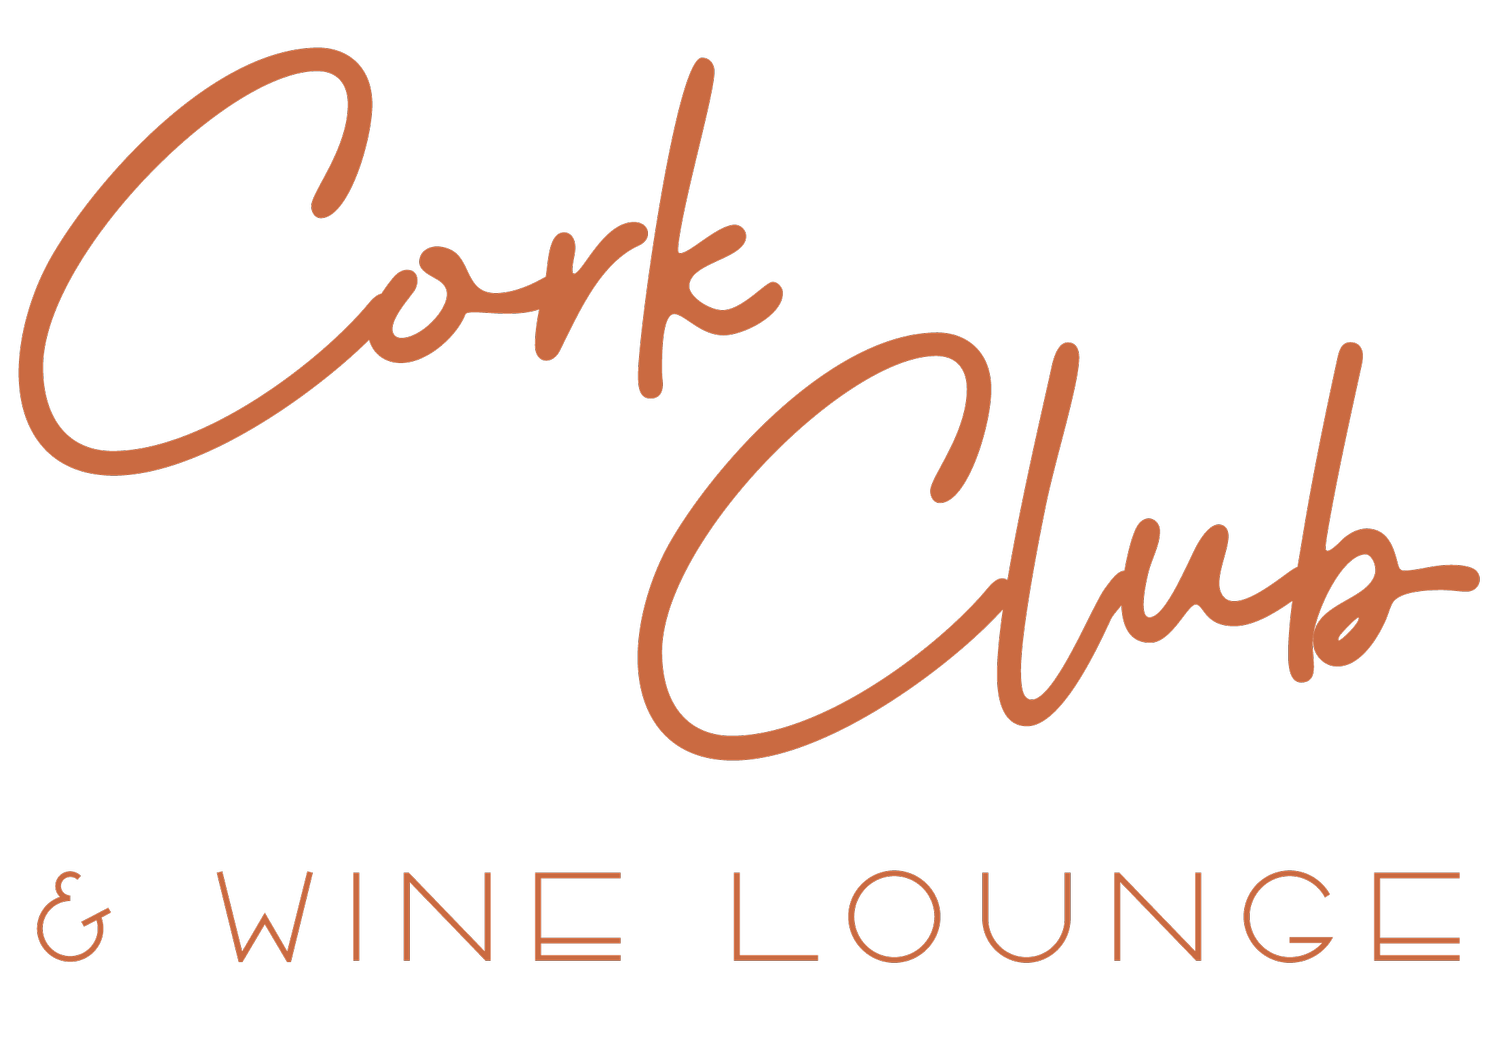 Cork Wine Club